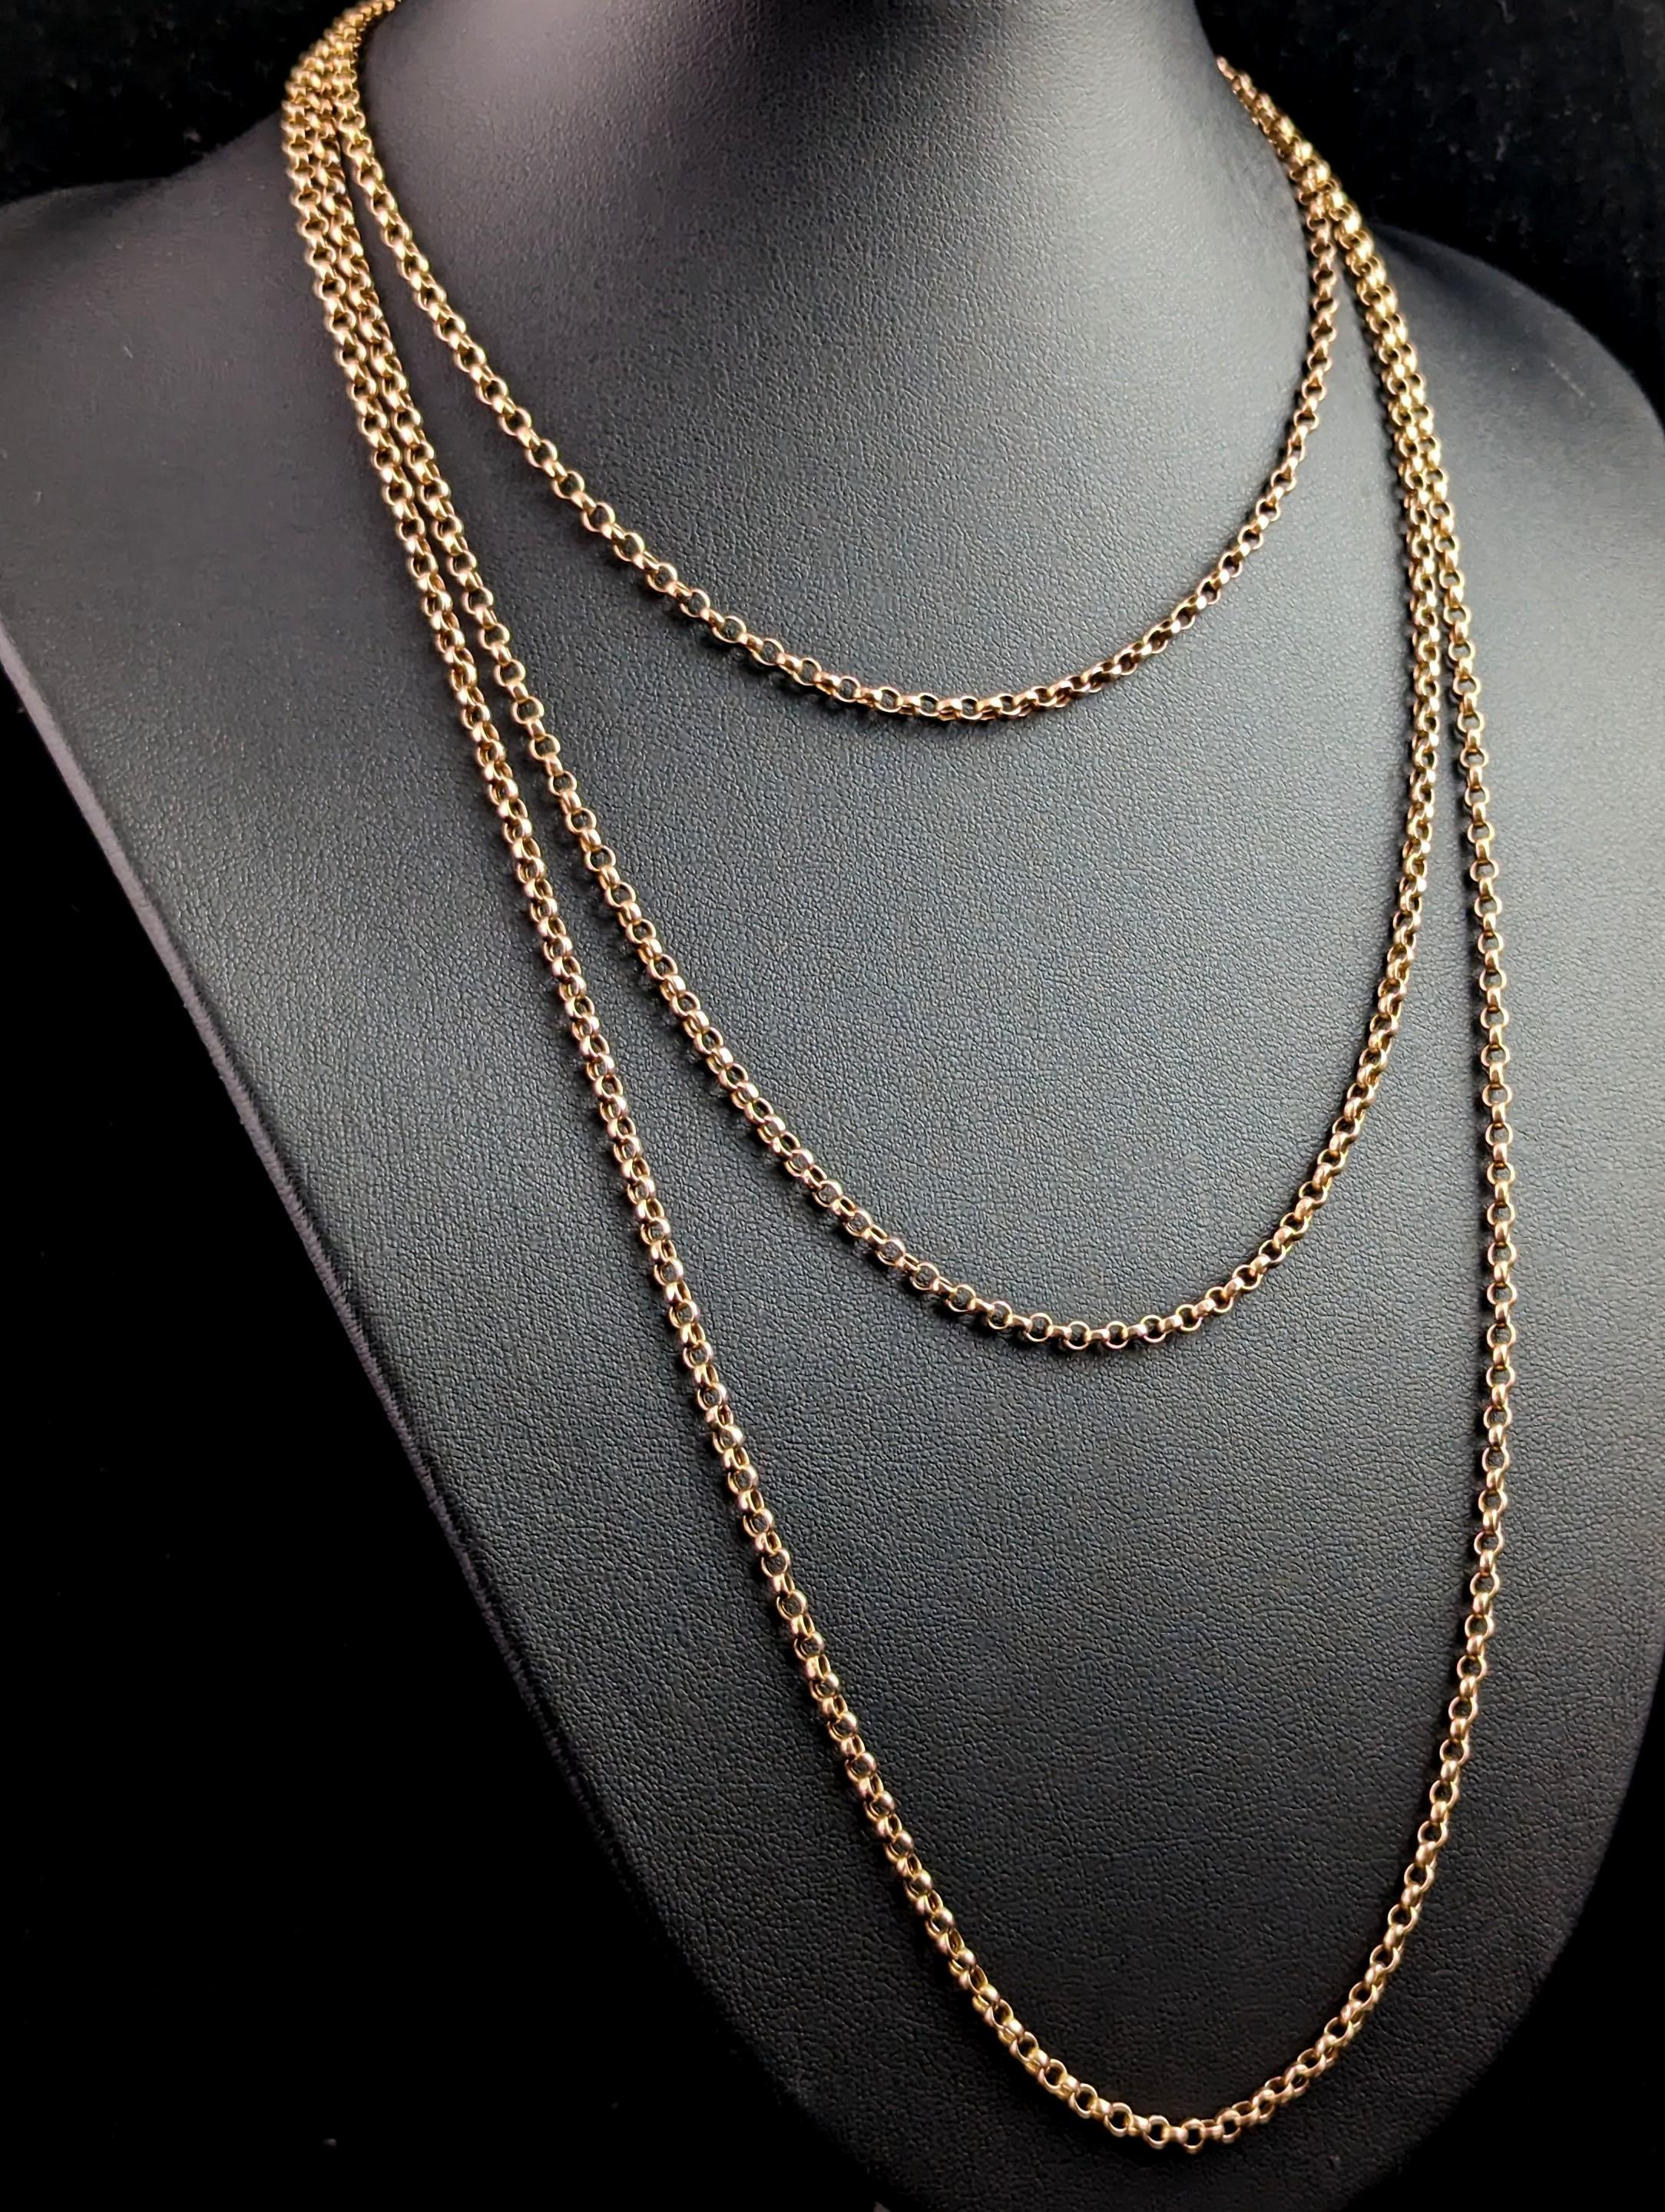 Women's Antique Victorian 9k Gold Longuard Chain Necklace, Muff Chain, Belcher Link